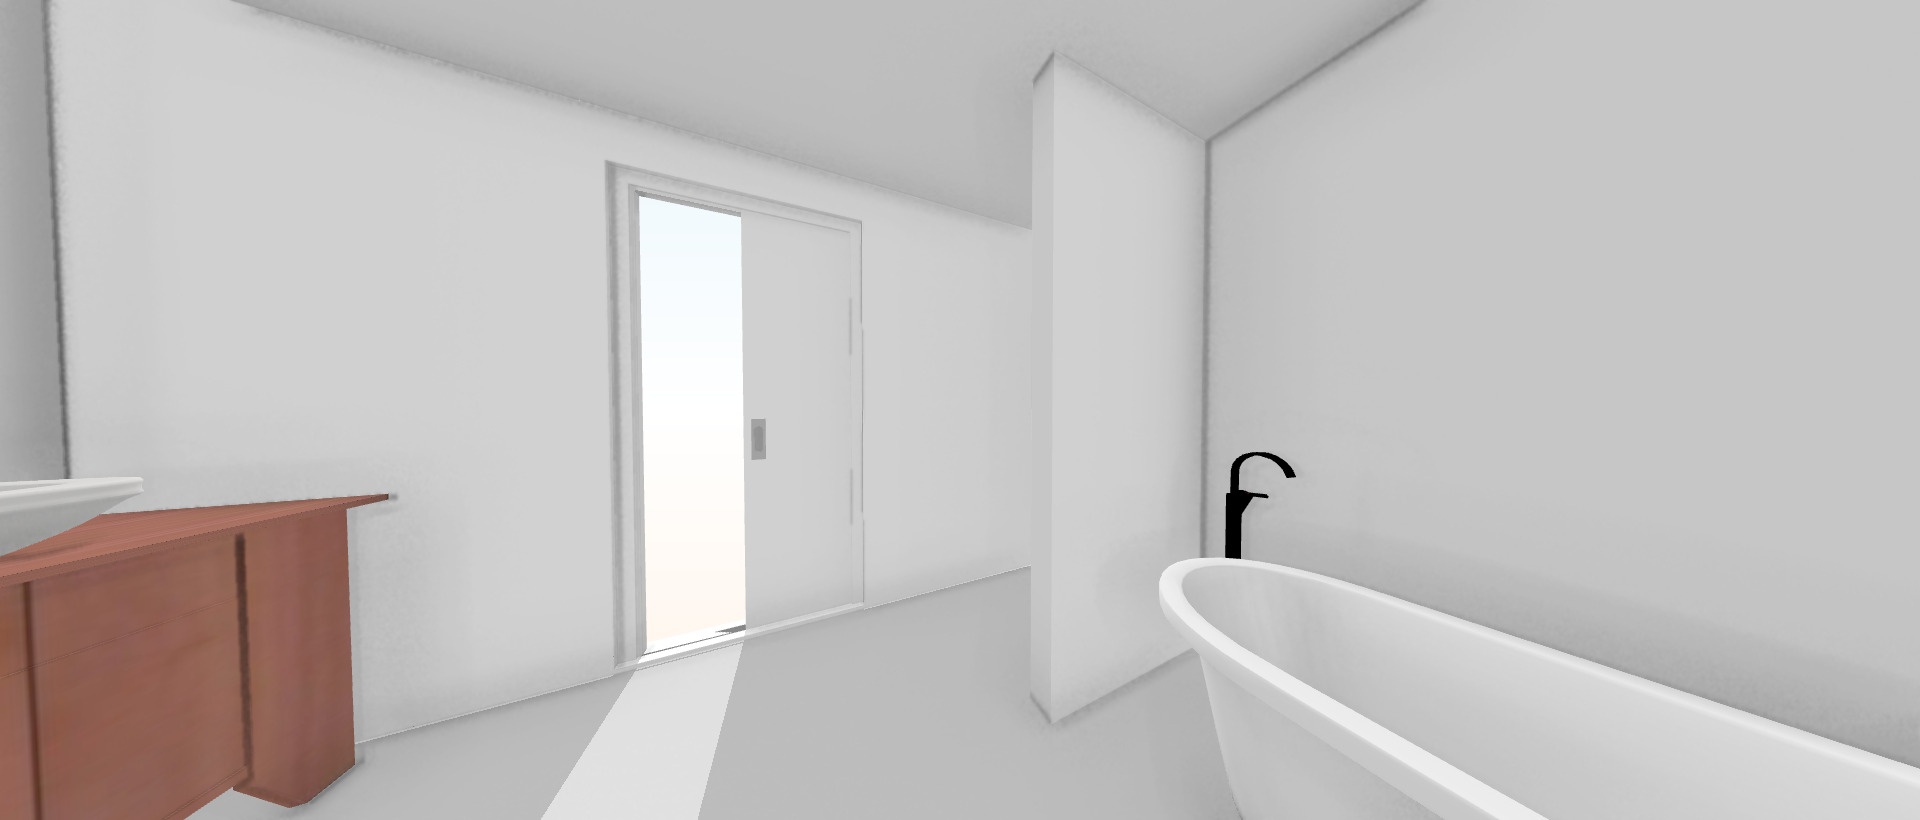 master bathroom floor plan - 3D - 1b